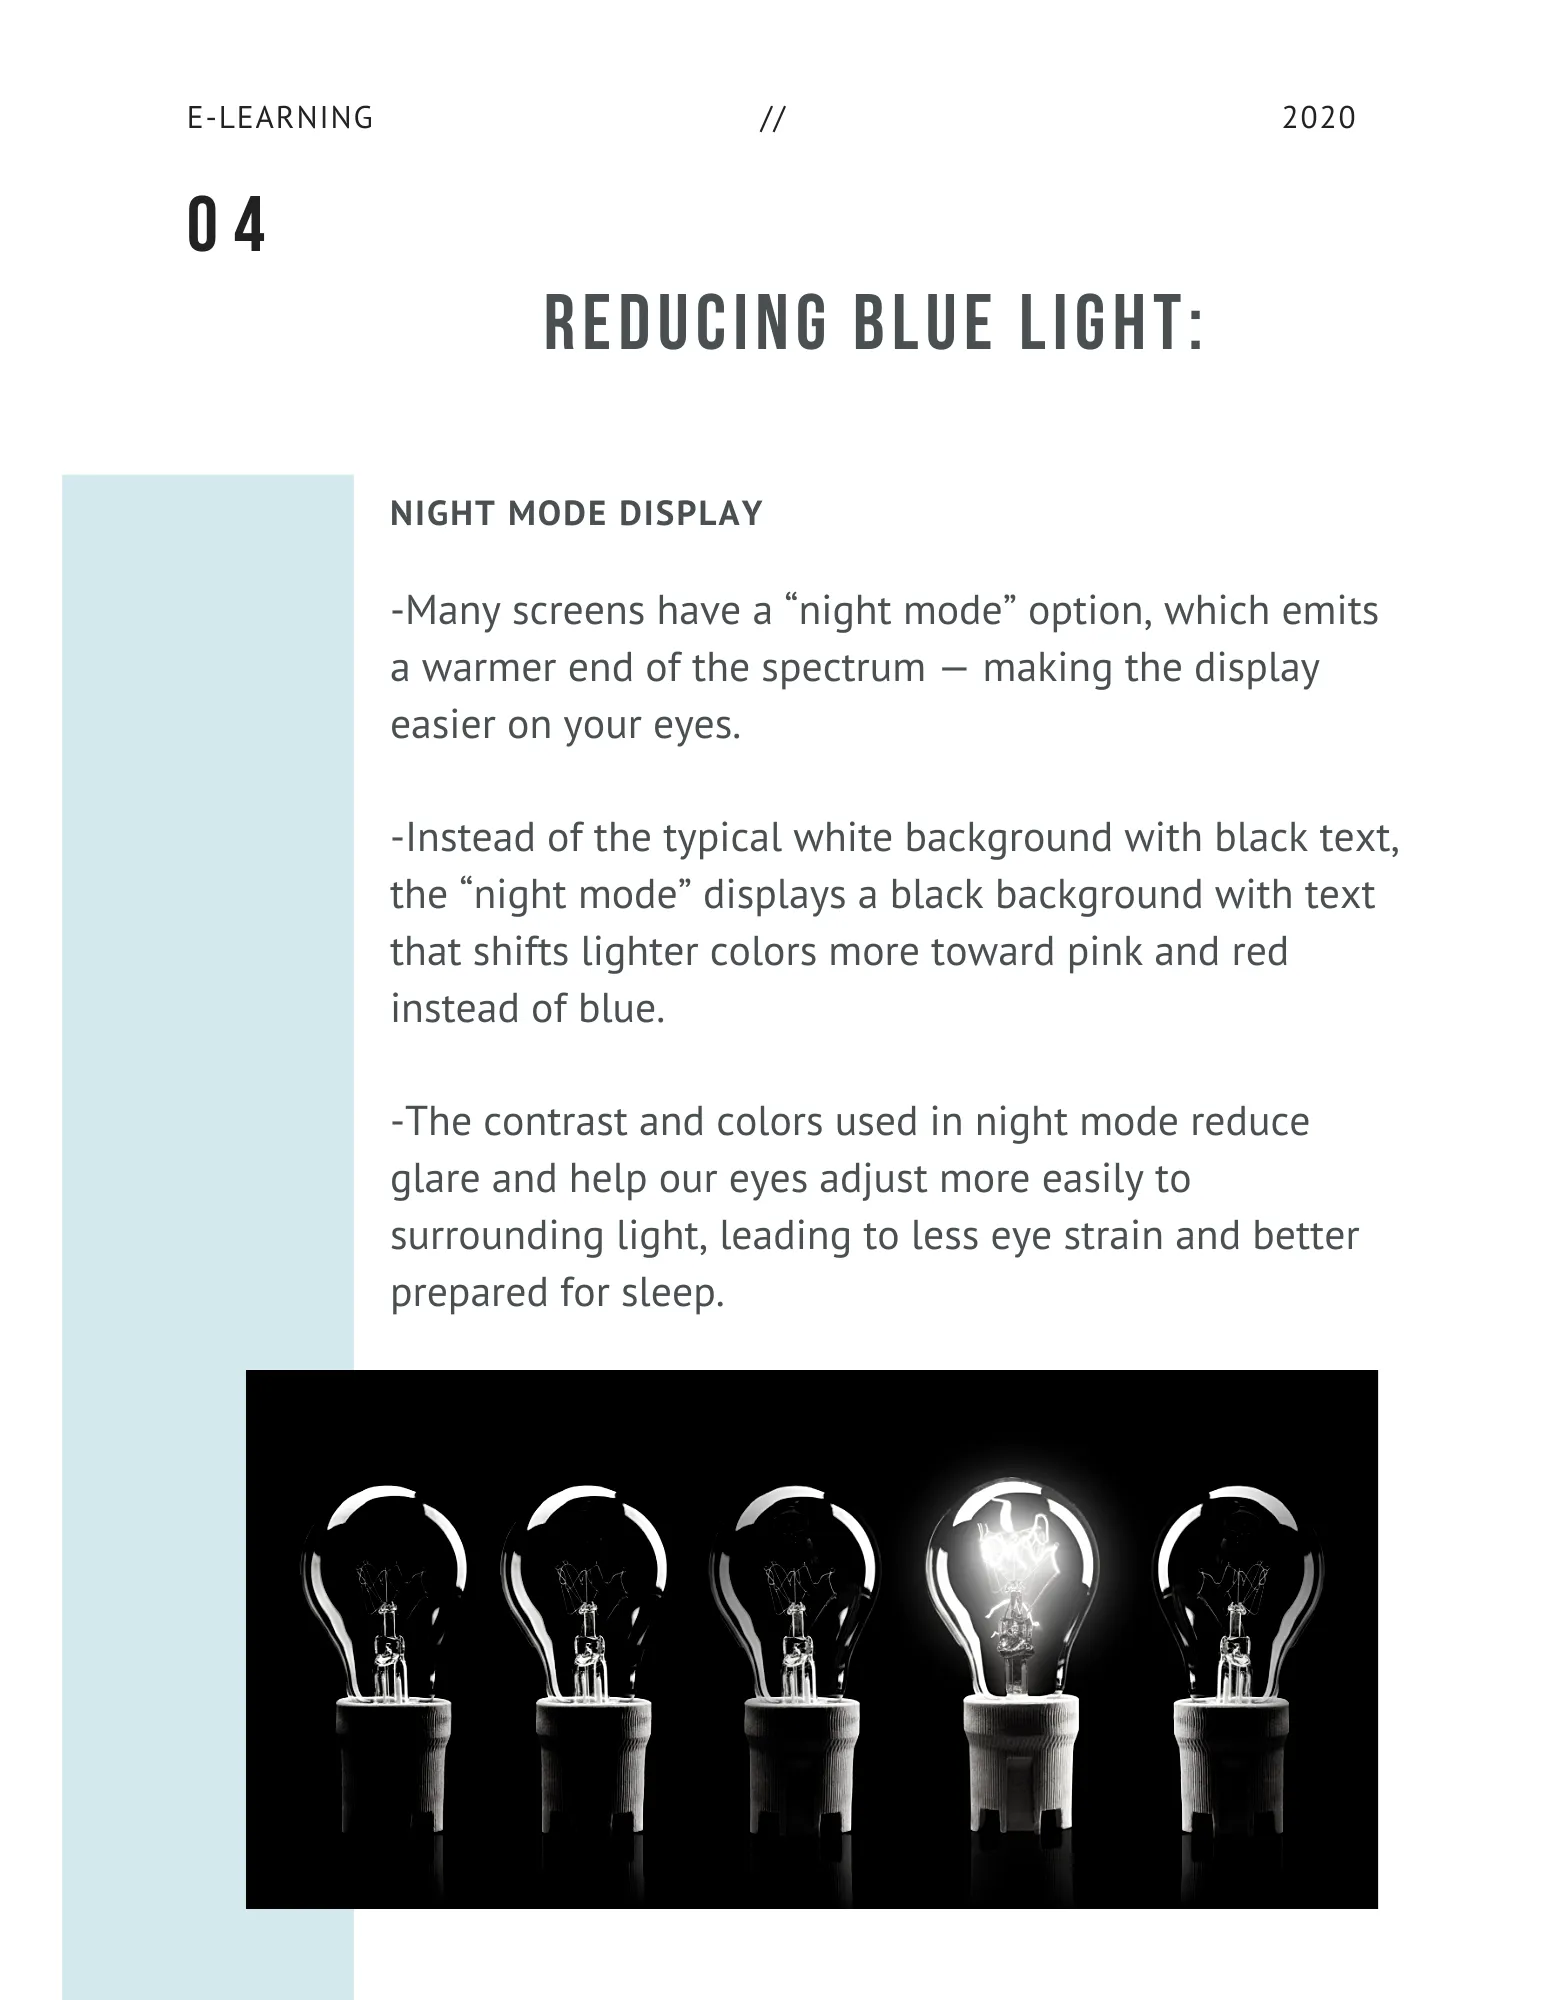 Reducing Blue Light